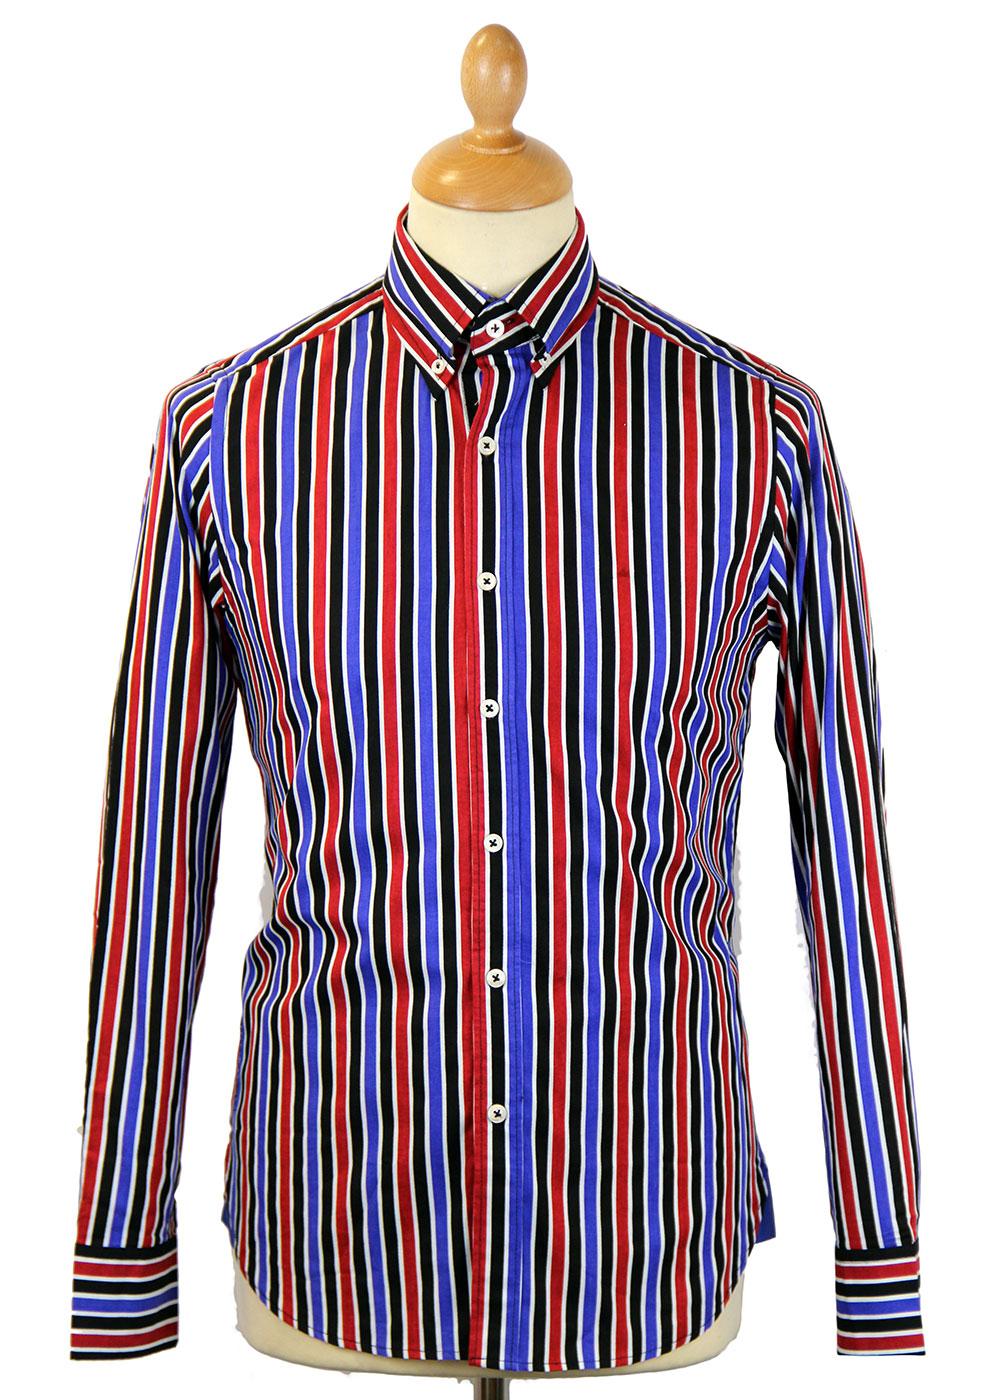 Steele DAVID WATTS Retro Mod Multi Stripe Shirt